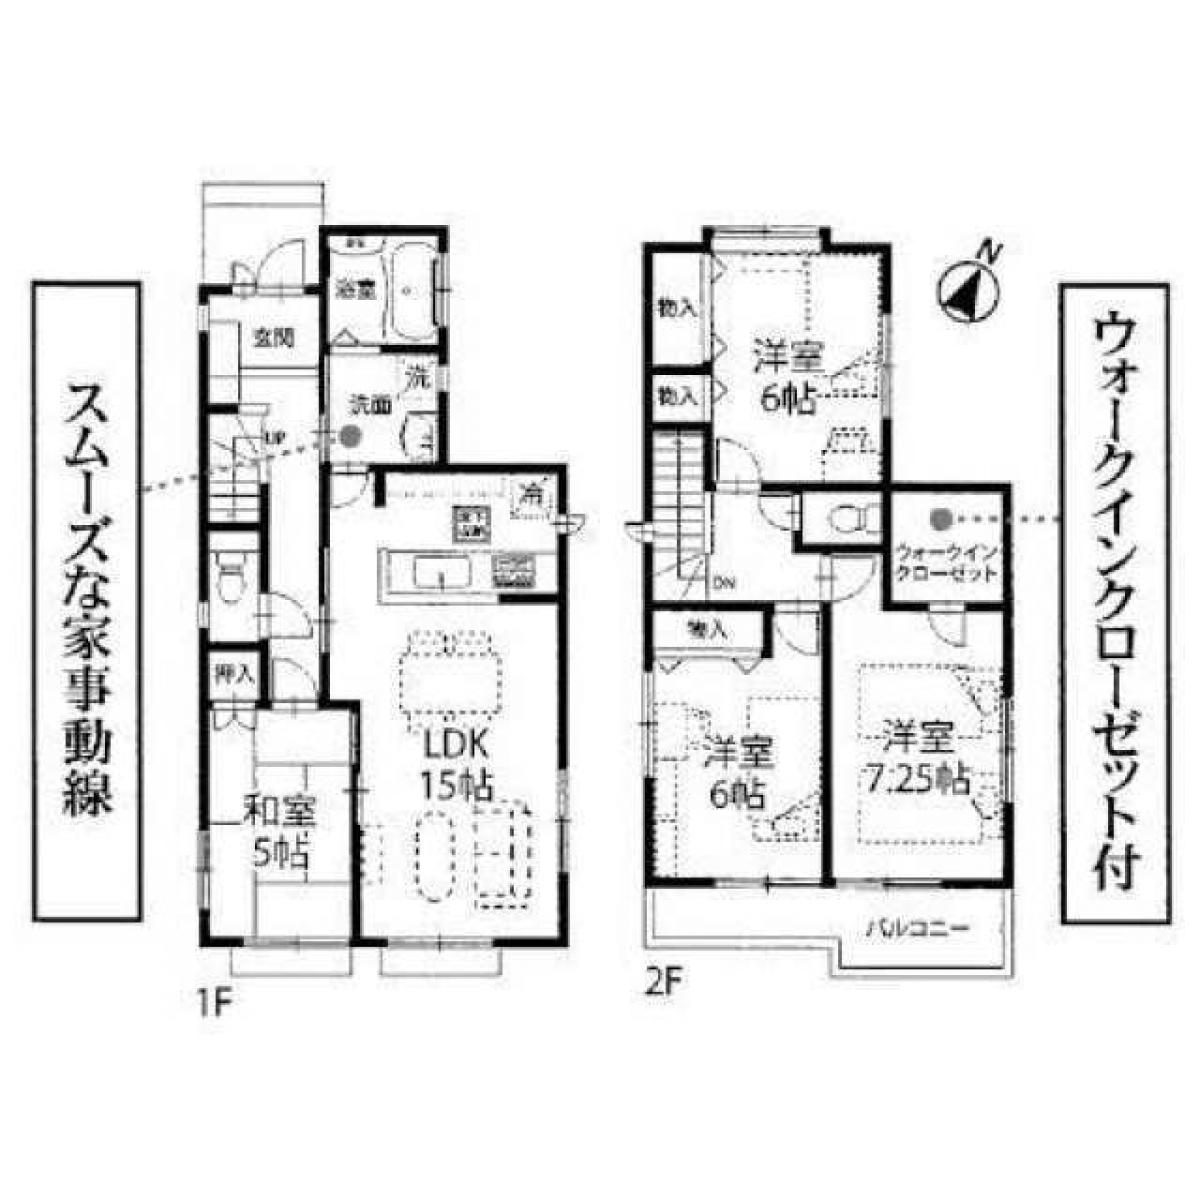 Picture of Home For Sale in Kawagoe Shi, Saitama, Japan